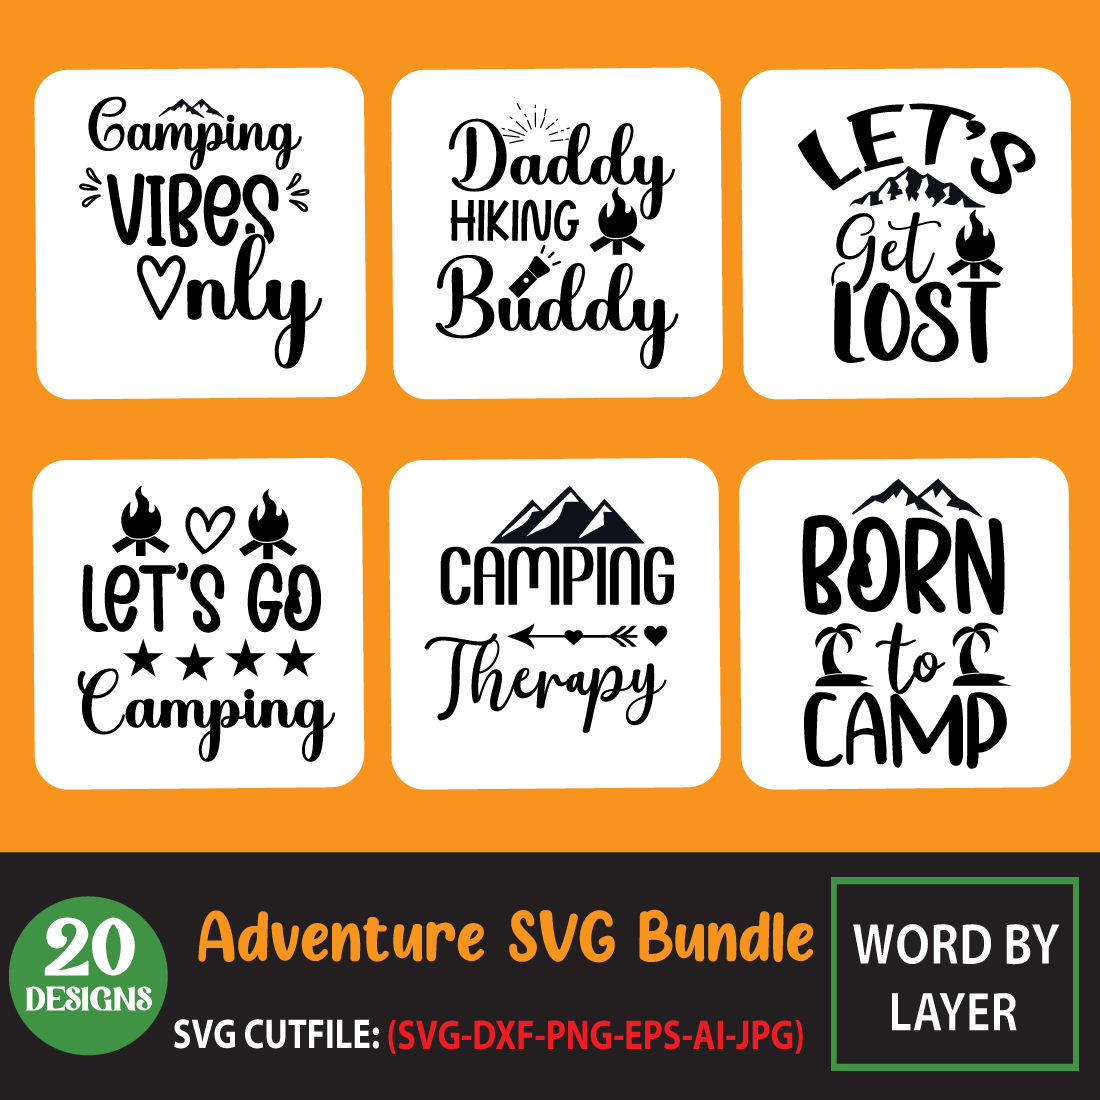 Adventure SVG Bundle main cover image.